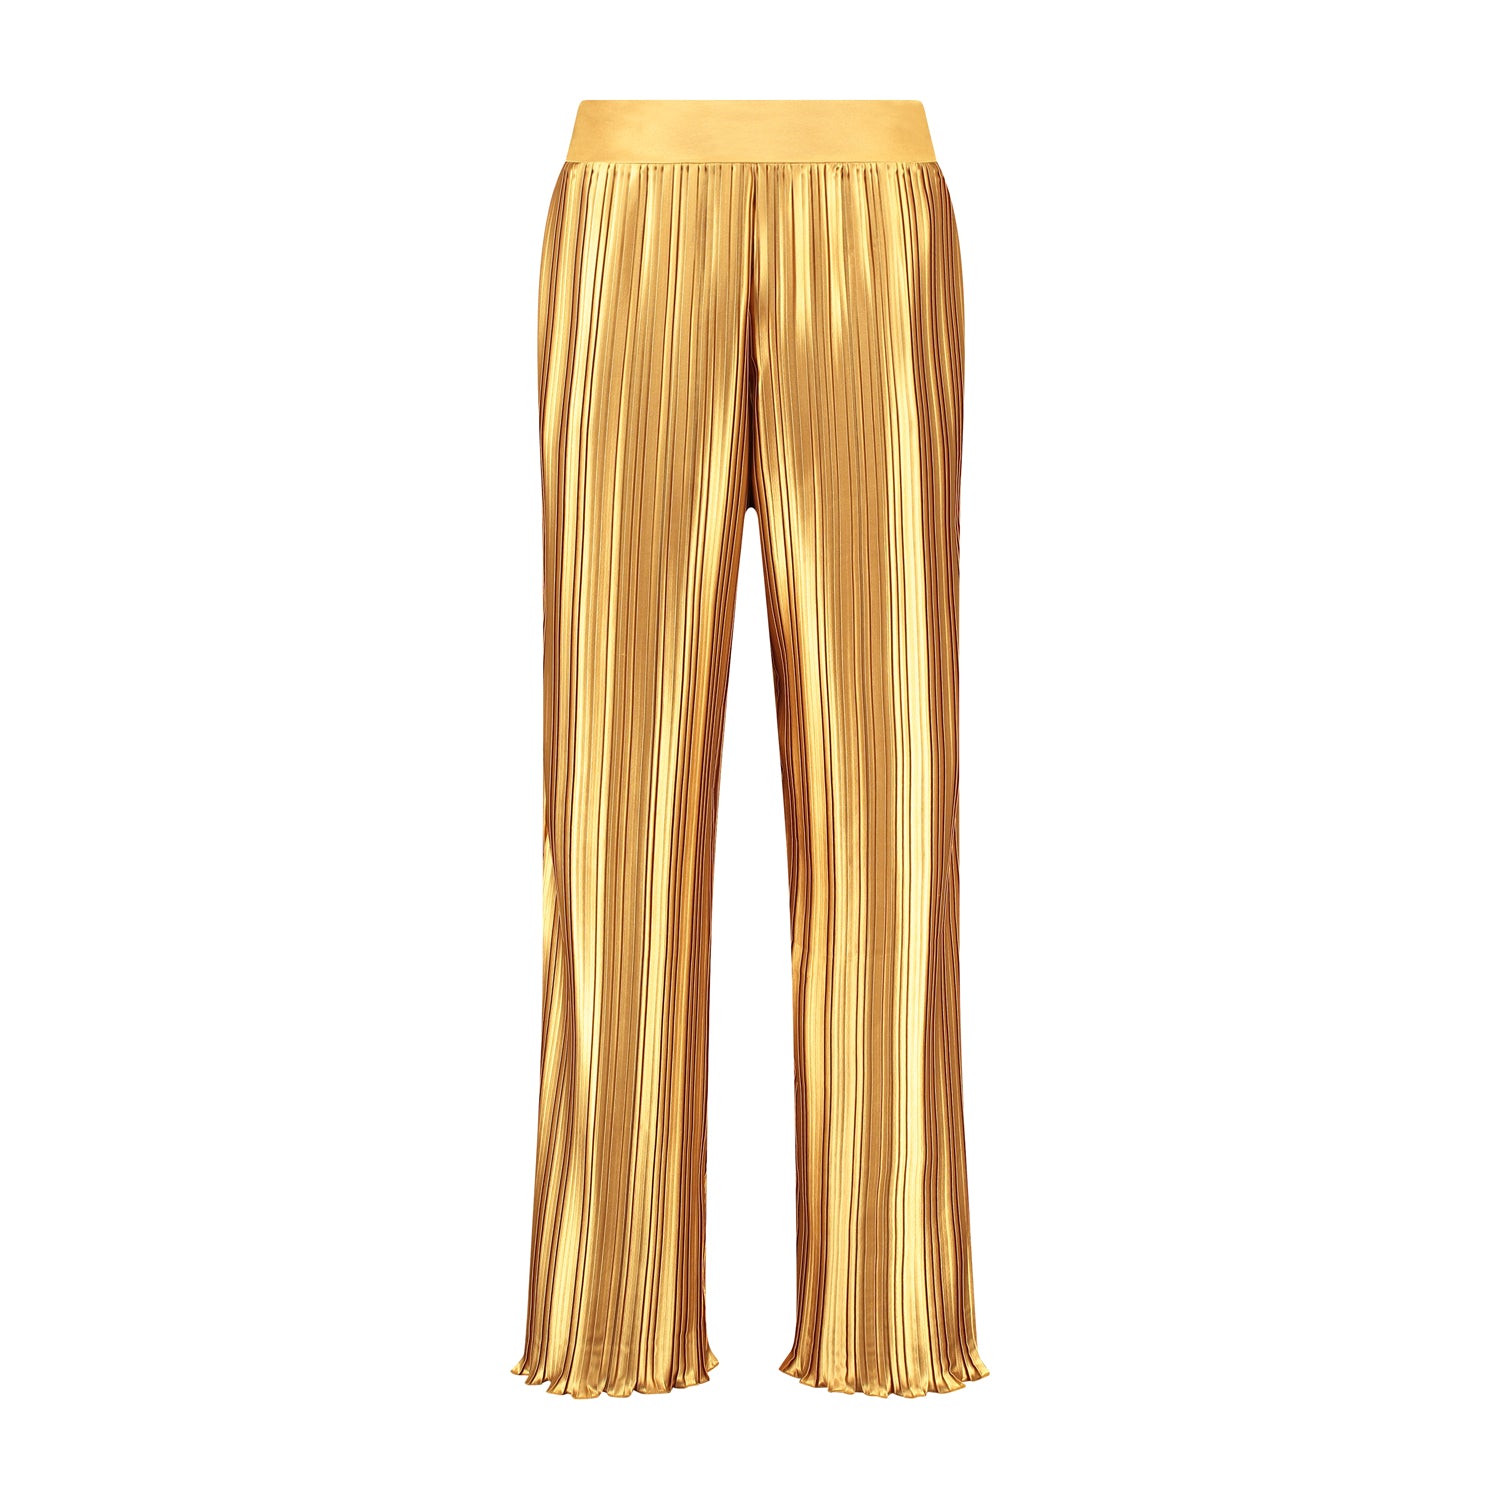 Abby plisse pants - gold